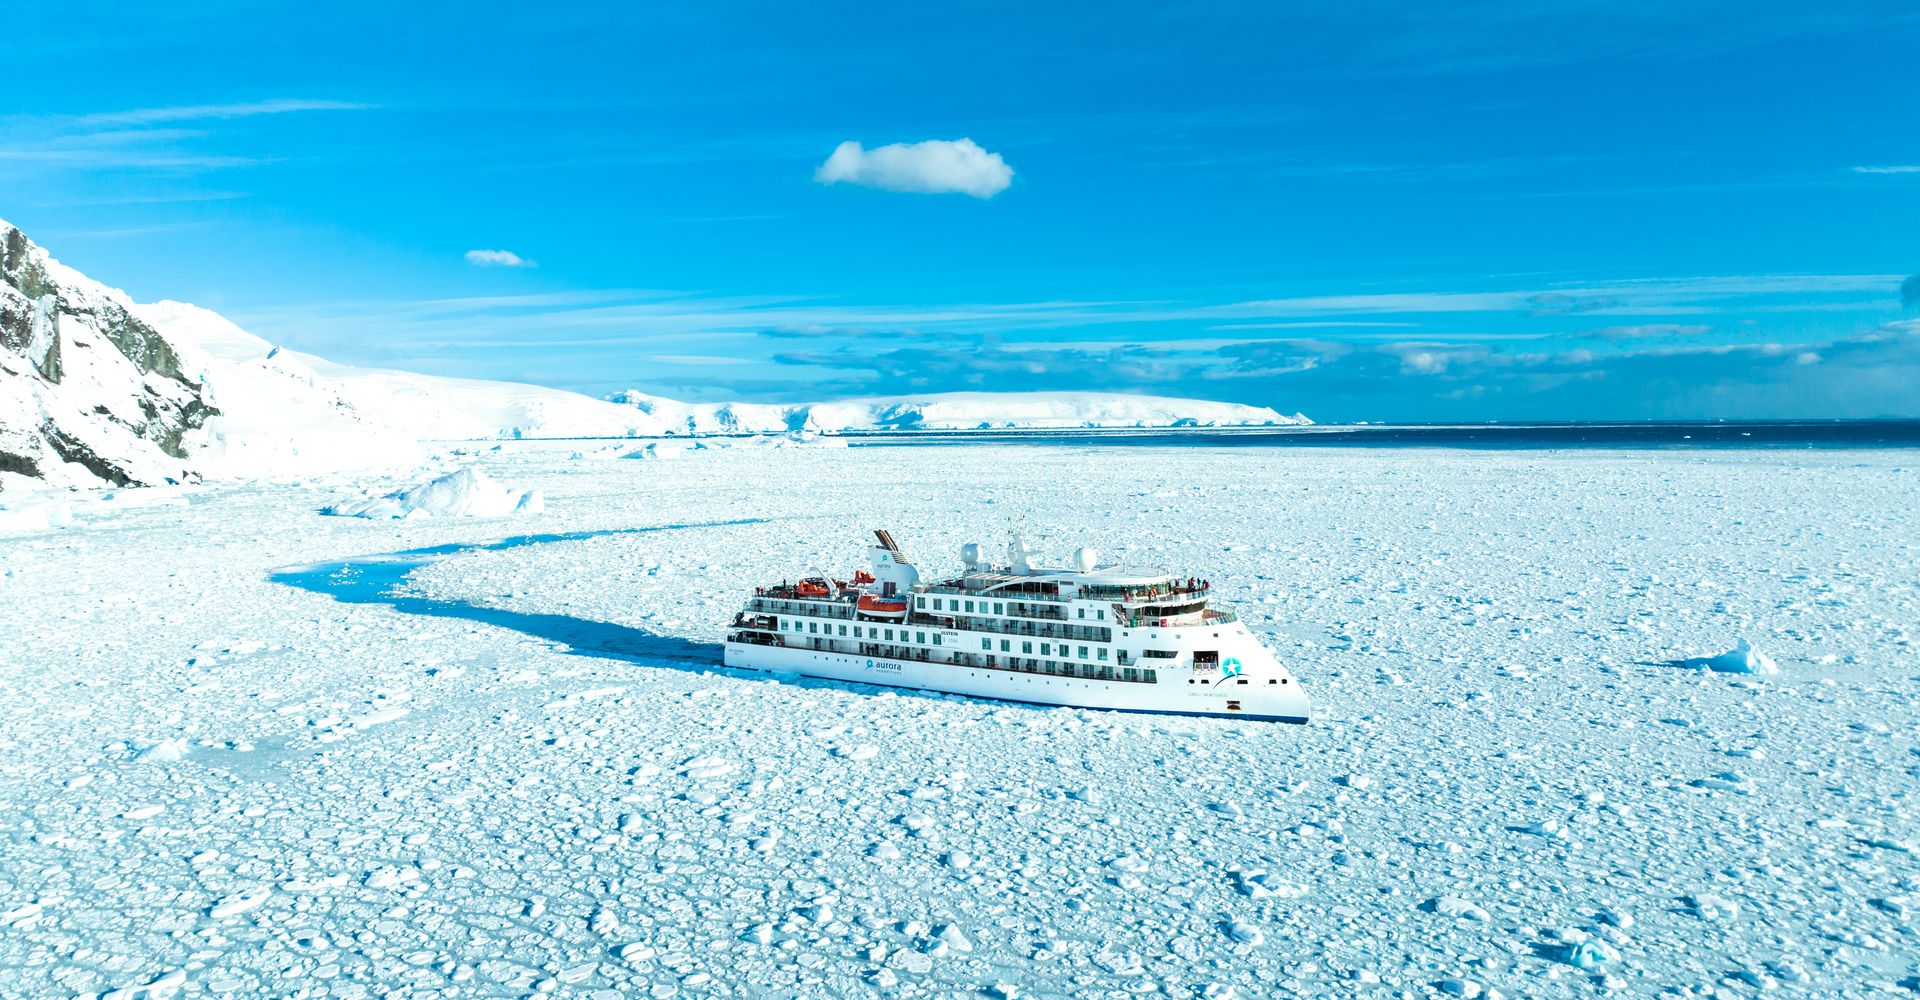 The Greg Mortimer sailing through sea ice in Antarctica